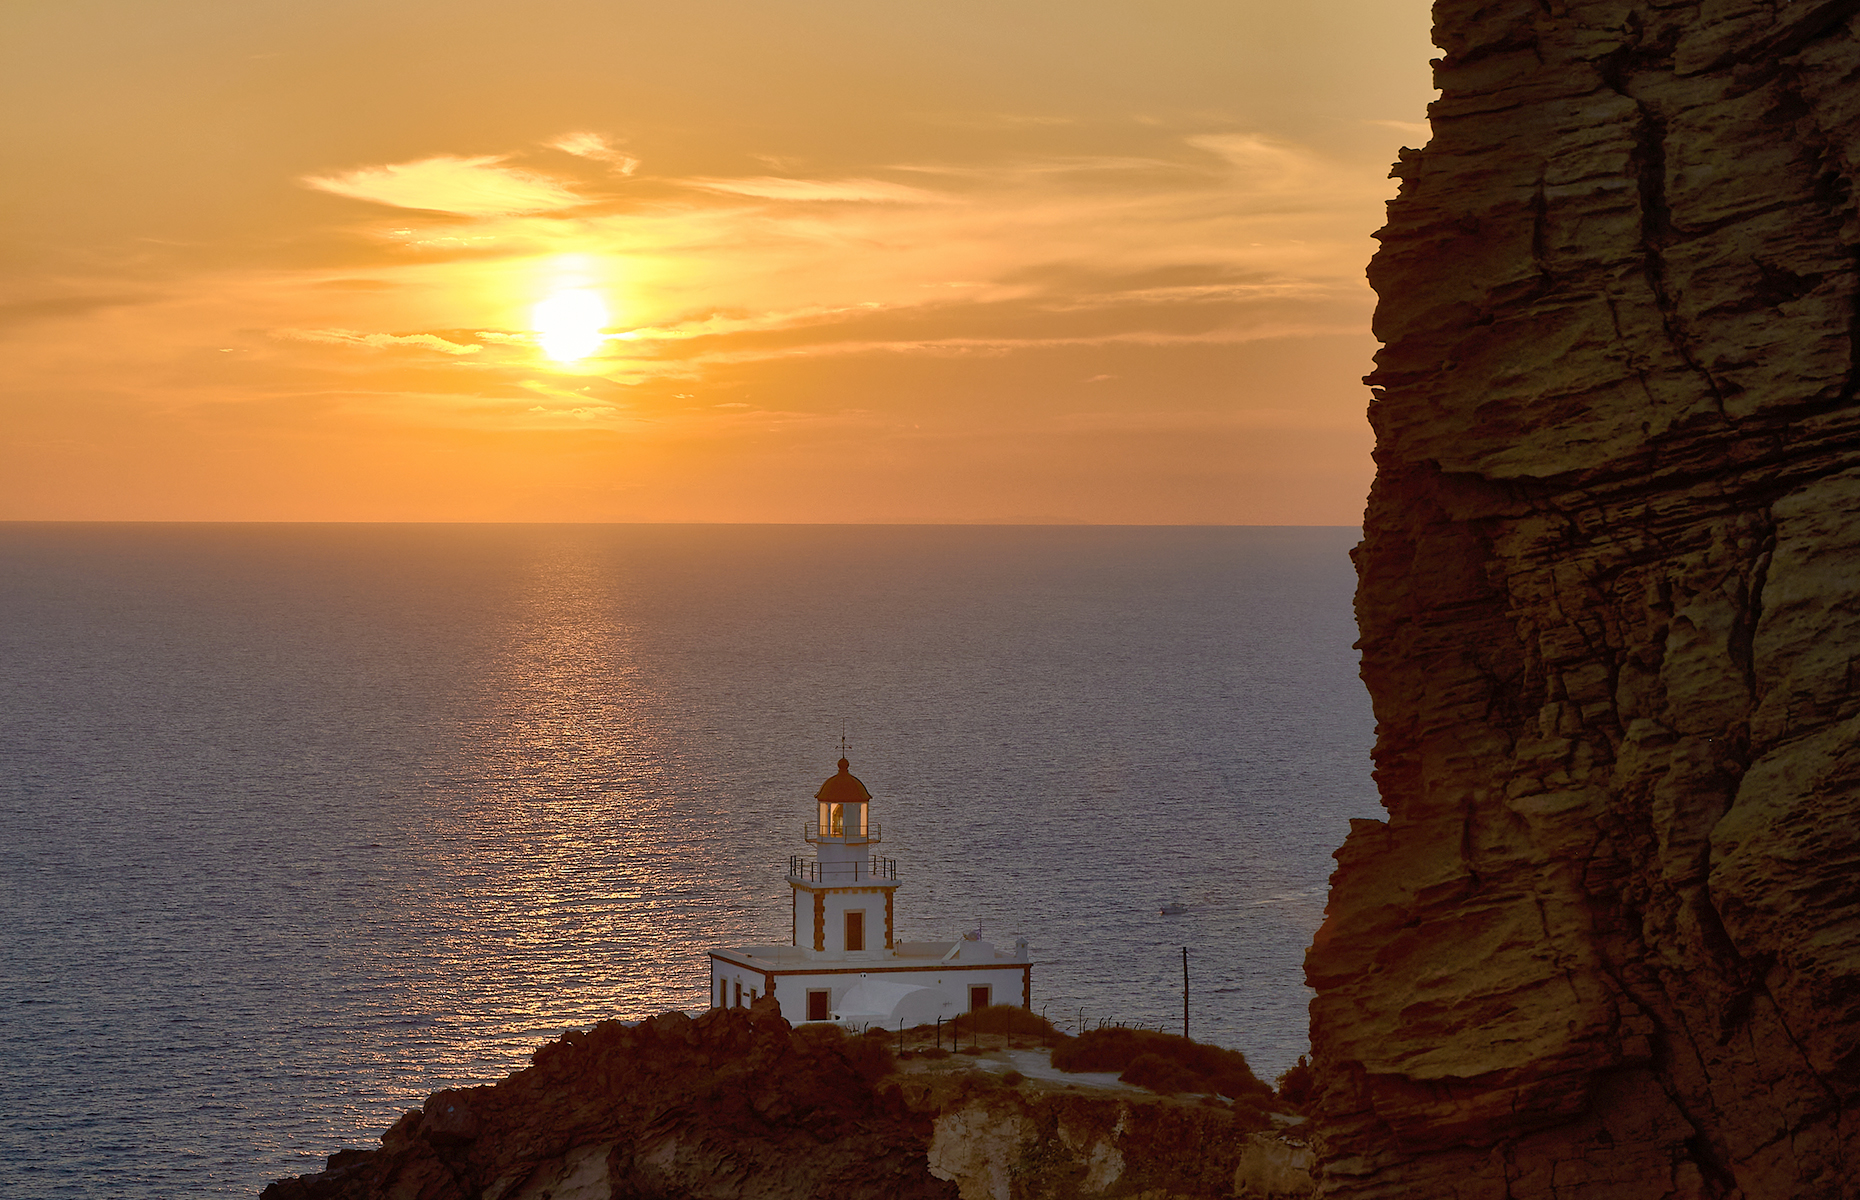 Sunset at Akrotiri lighthouse, Santorini. (Image: Jdiezfoto - Juan DYB/Shutterstock)